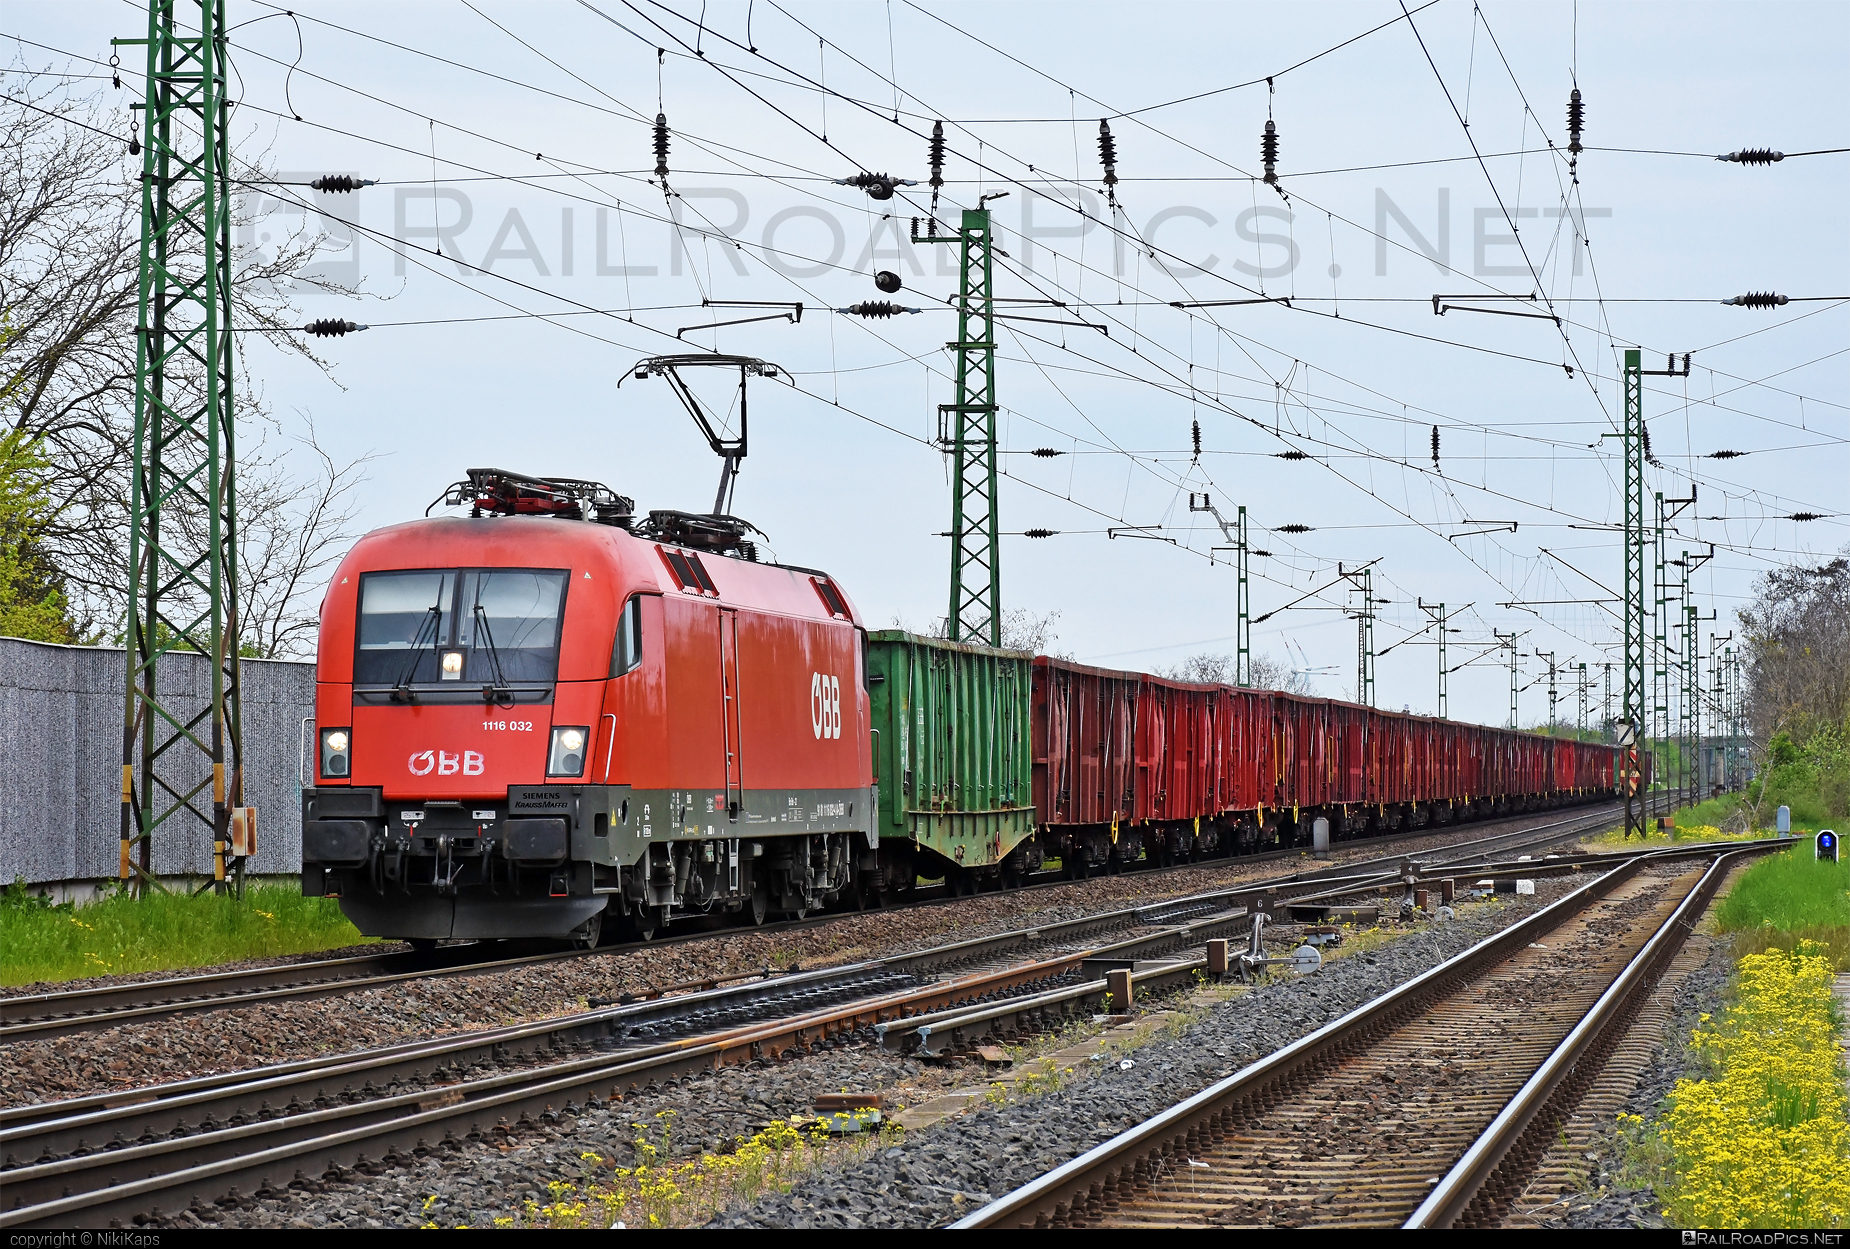 Siemens ES 64 U2 - 1116 032 operated by Rail Cargo Austria AG #es64 #es64u2 #eurosprinter #obb #openwagon #osterreichischebundesbahnen #rcw #siemens #siemensEs64 #siemensEs64u2 #siemenstaurus #taurus #tauruslocomotive